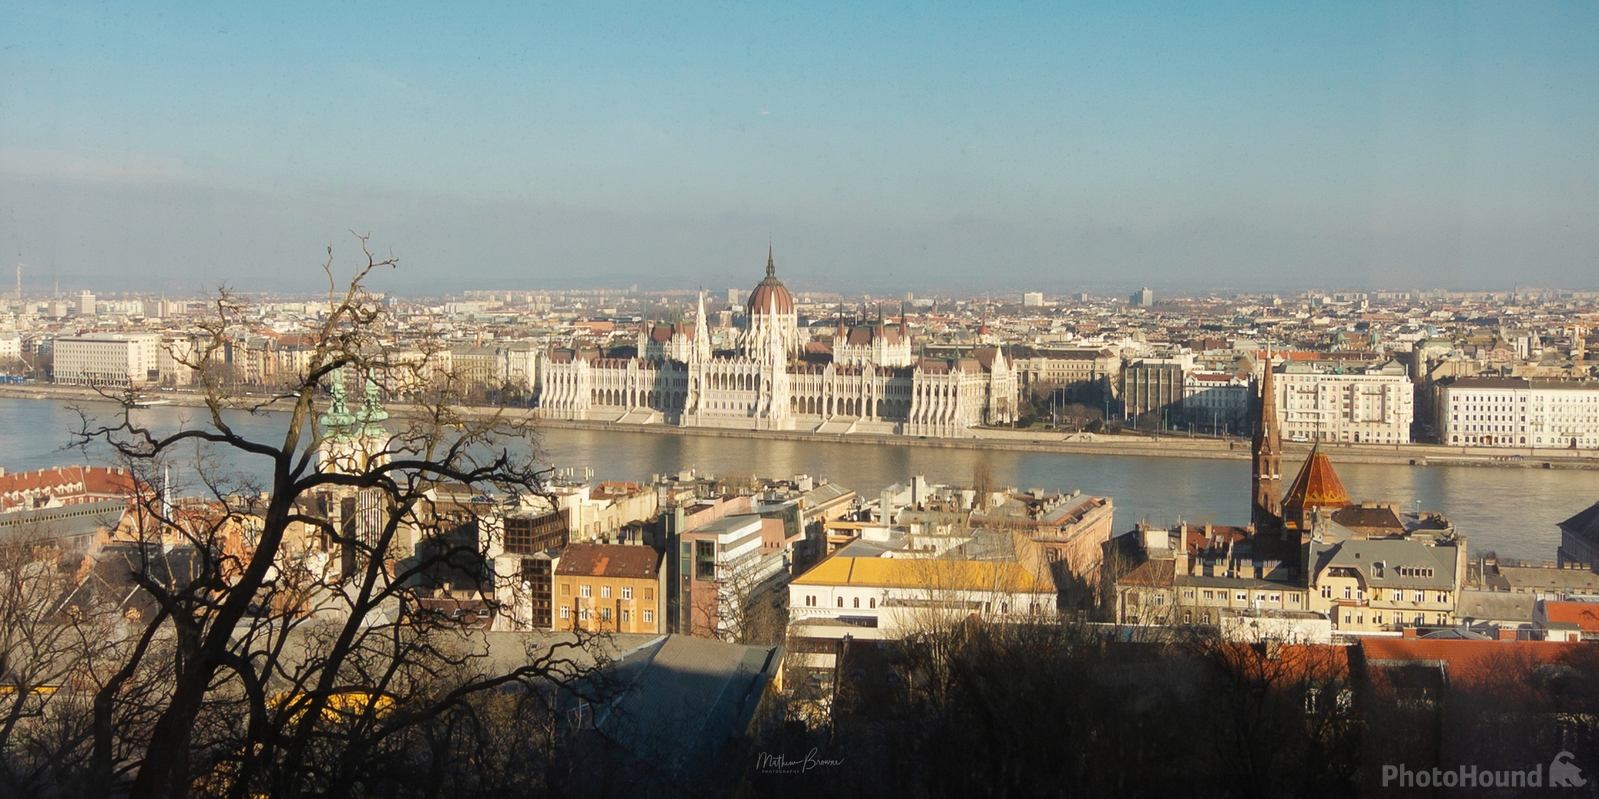 Image of Hilton Budapest by Mathew Browne